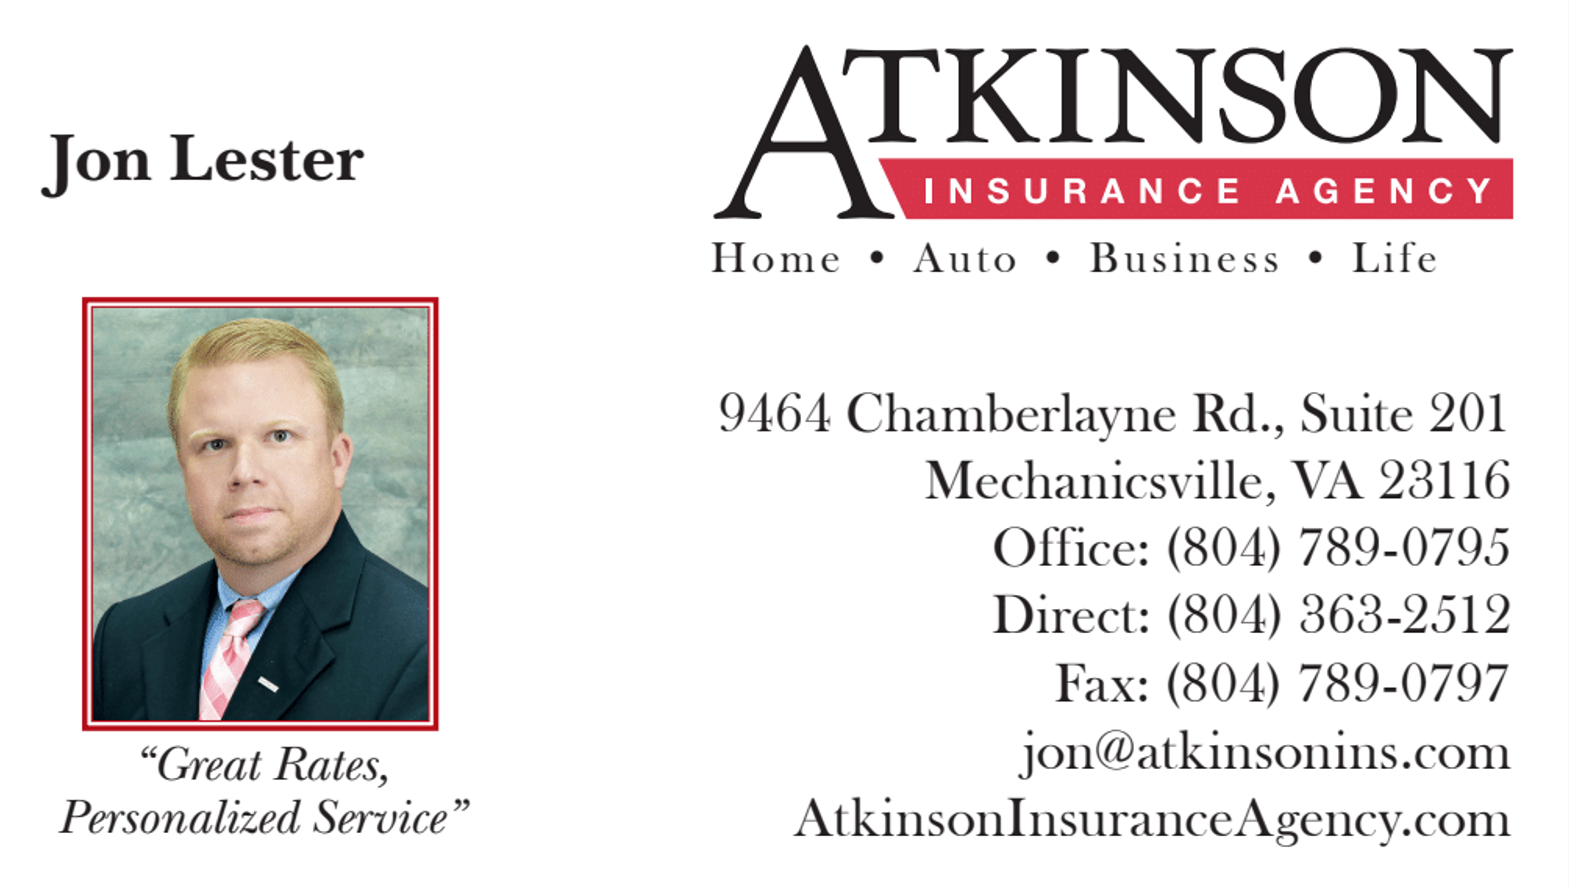 Atkinson Insurance Agency